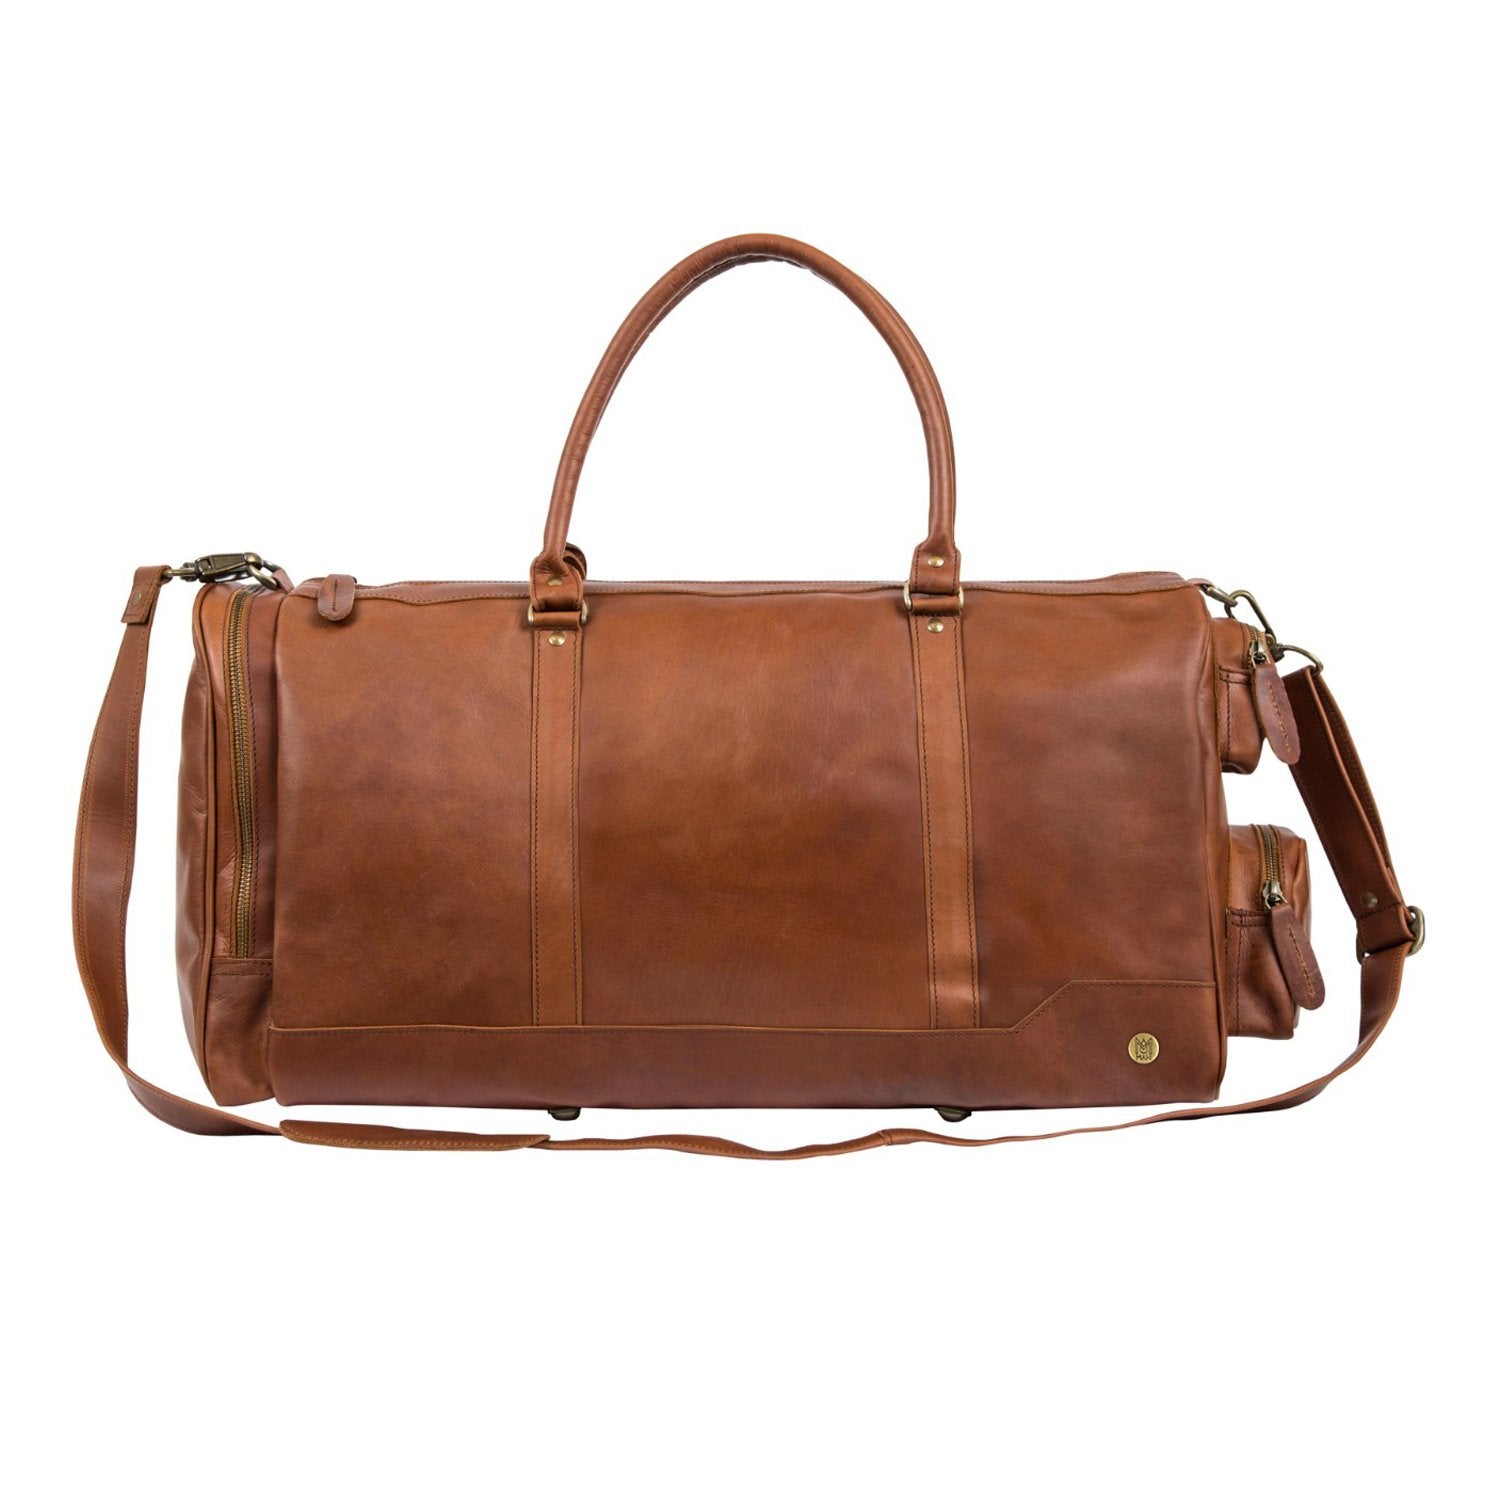 MAHI Leather | Tote Bags & Accessories